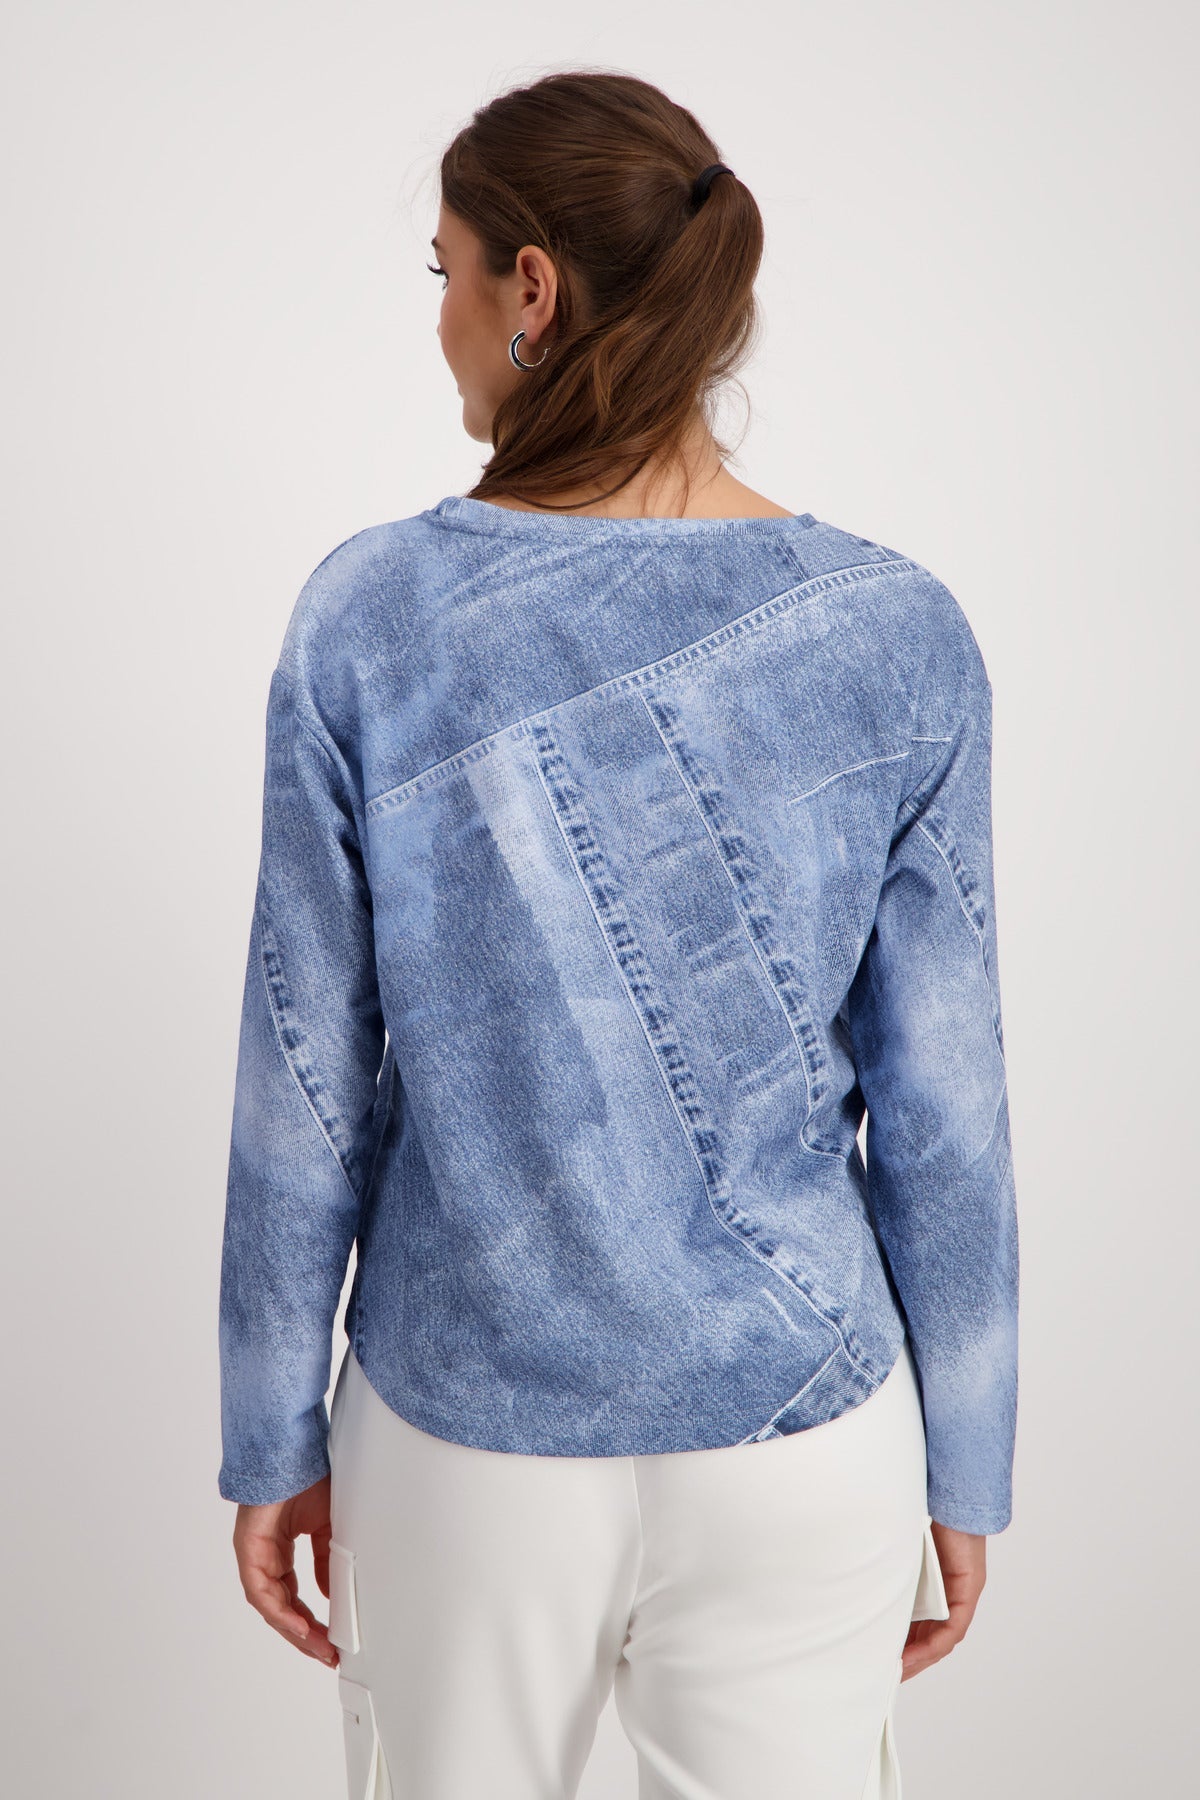 Shop Streetstyle Sweatshirt with Rhinestones | Indigo Pattern - Monari